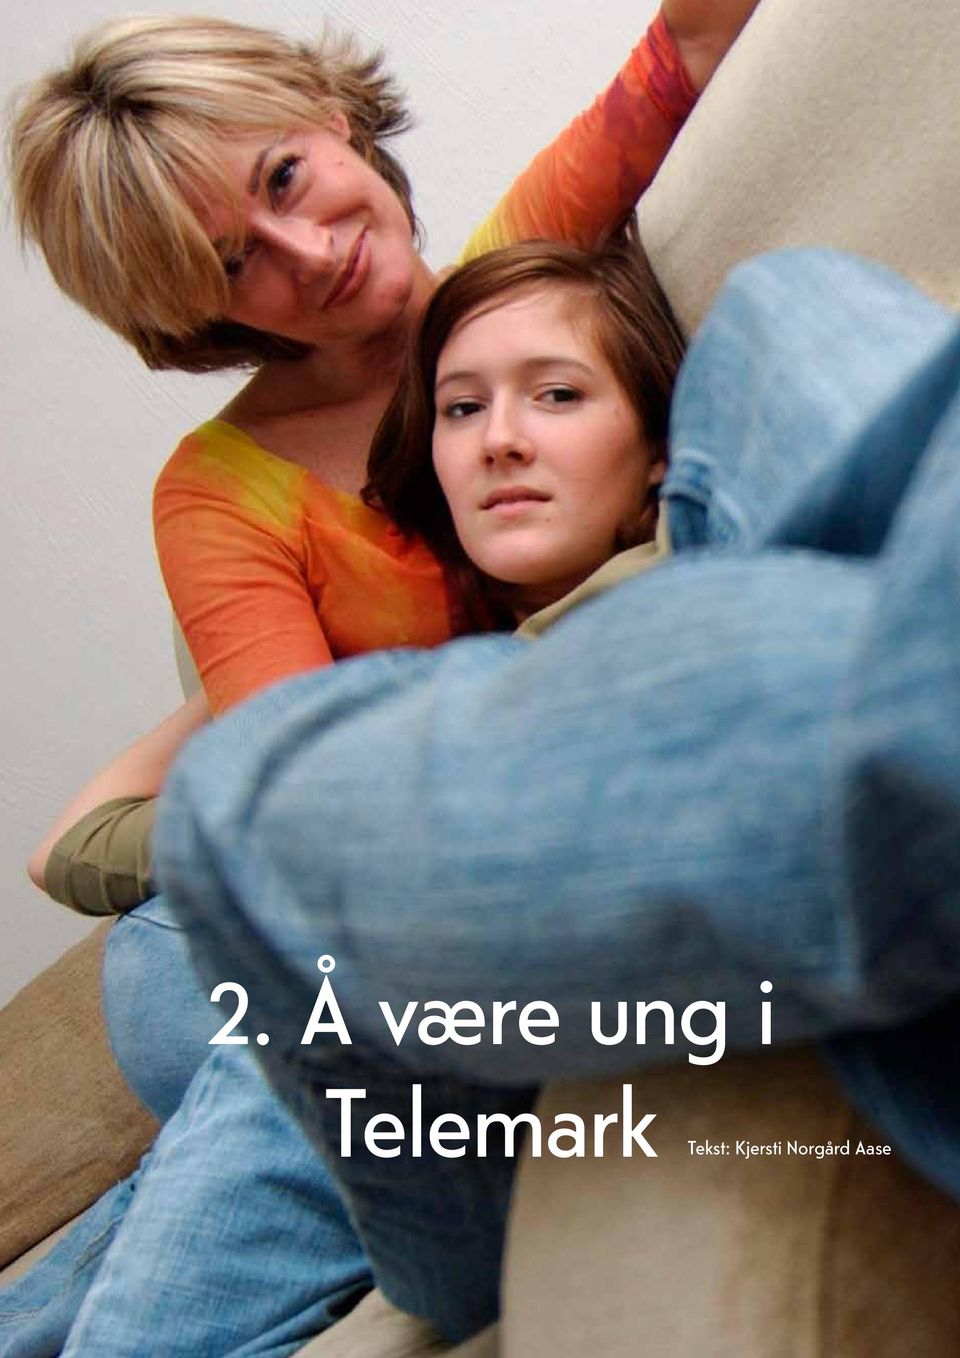 Telemark